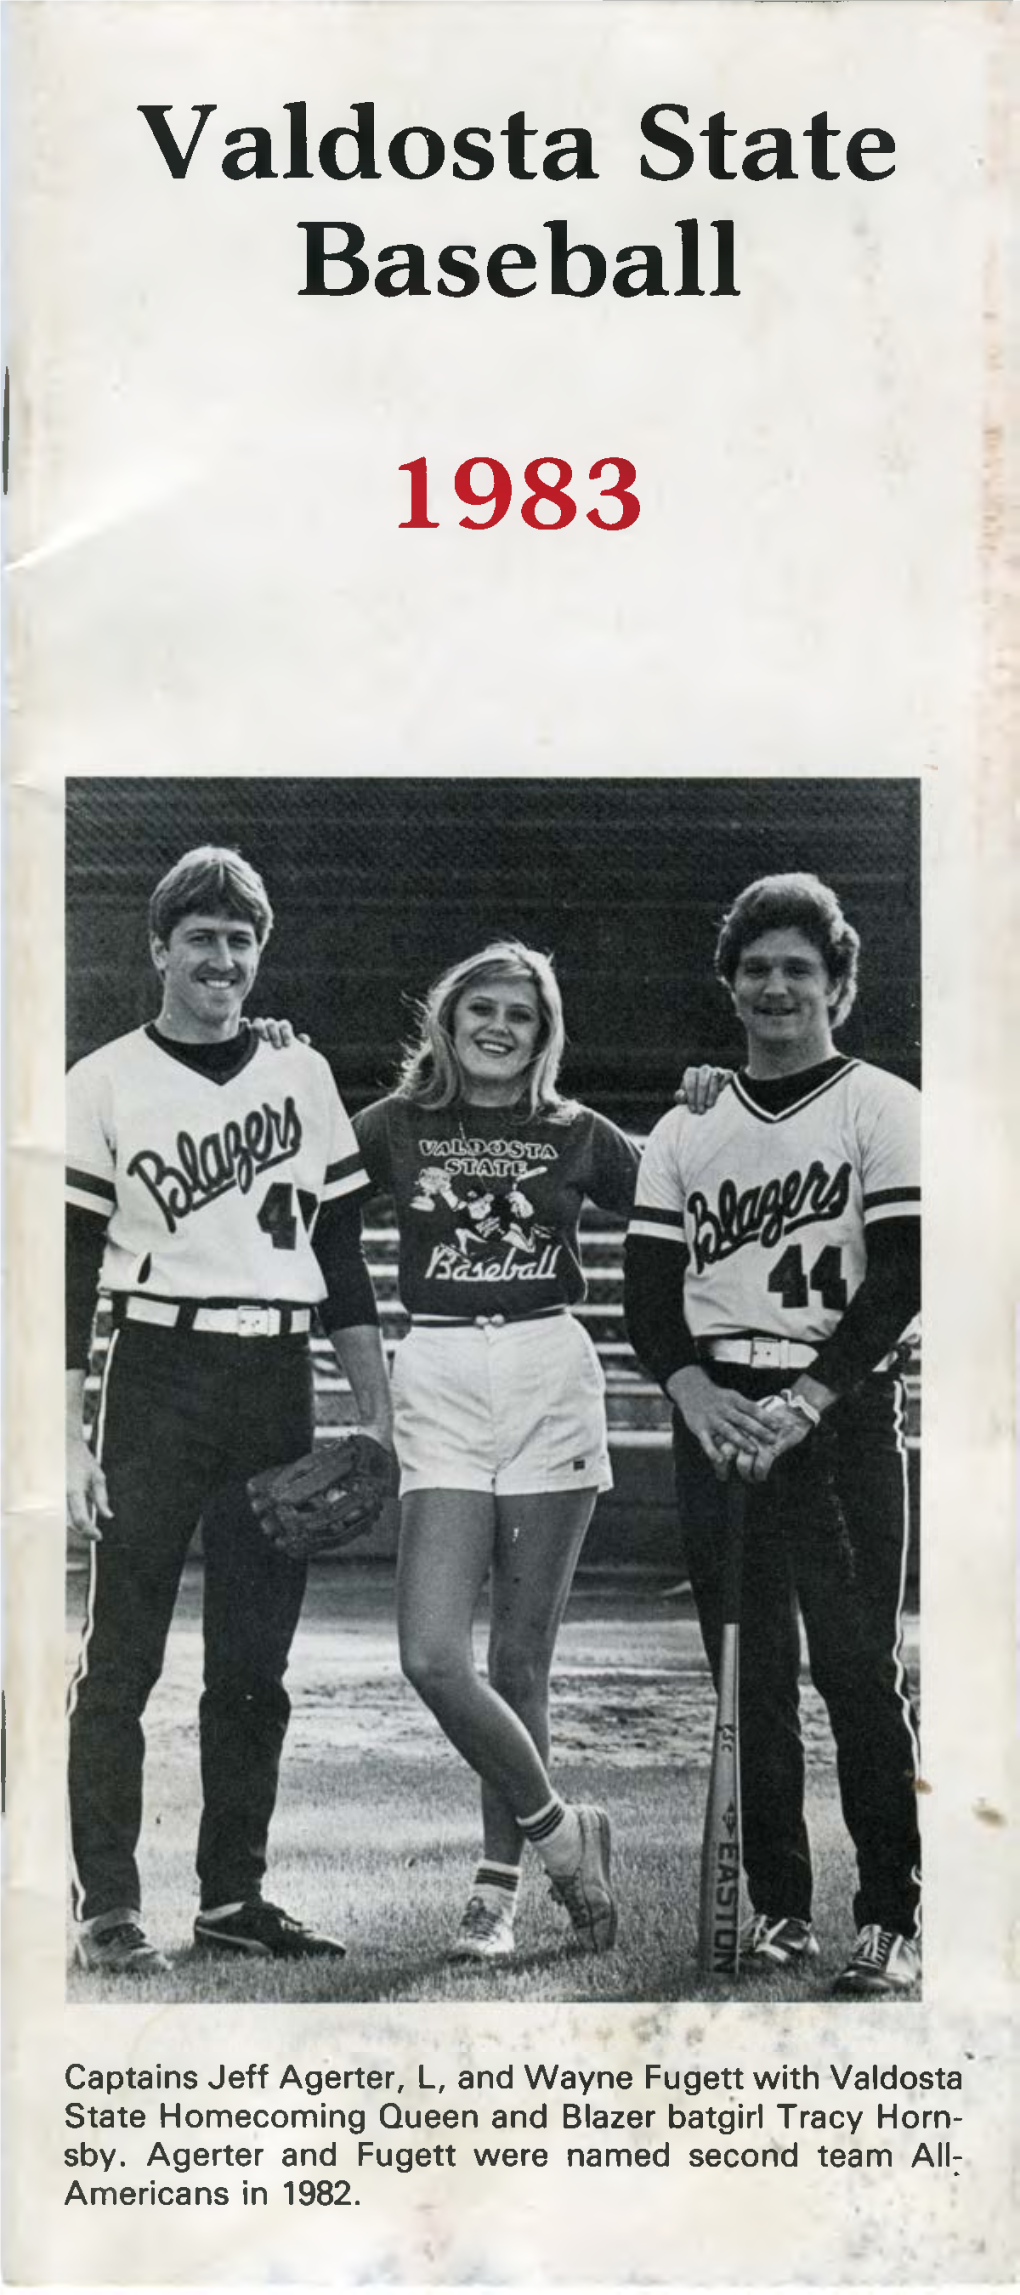 Valdosta State Baseball, 1983